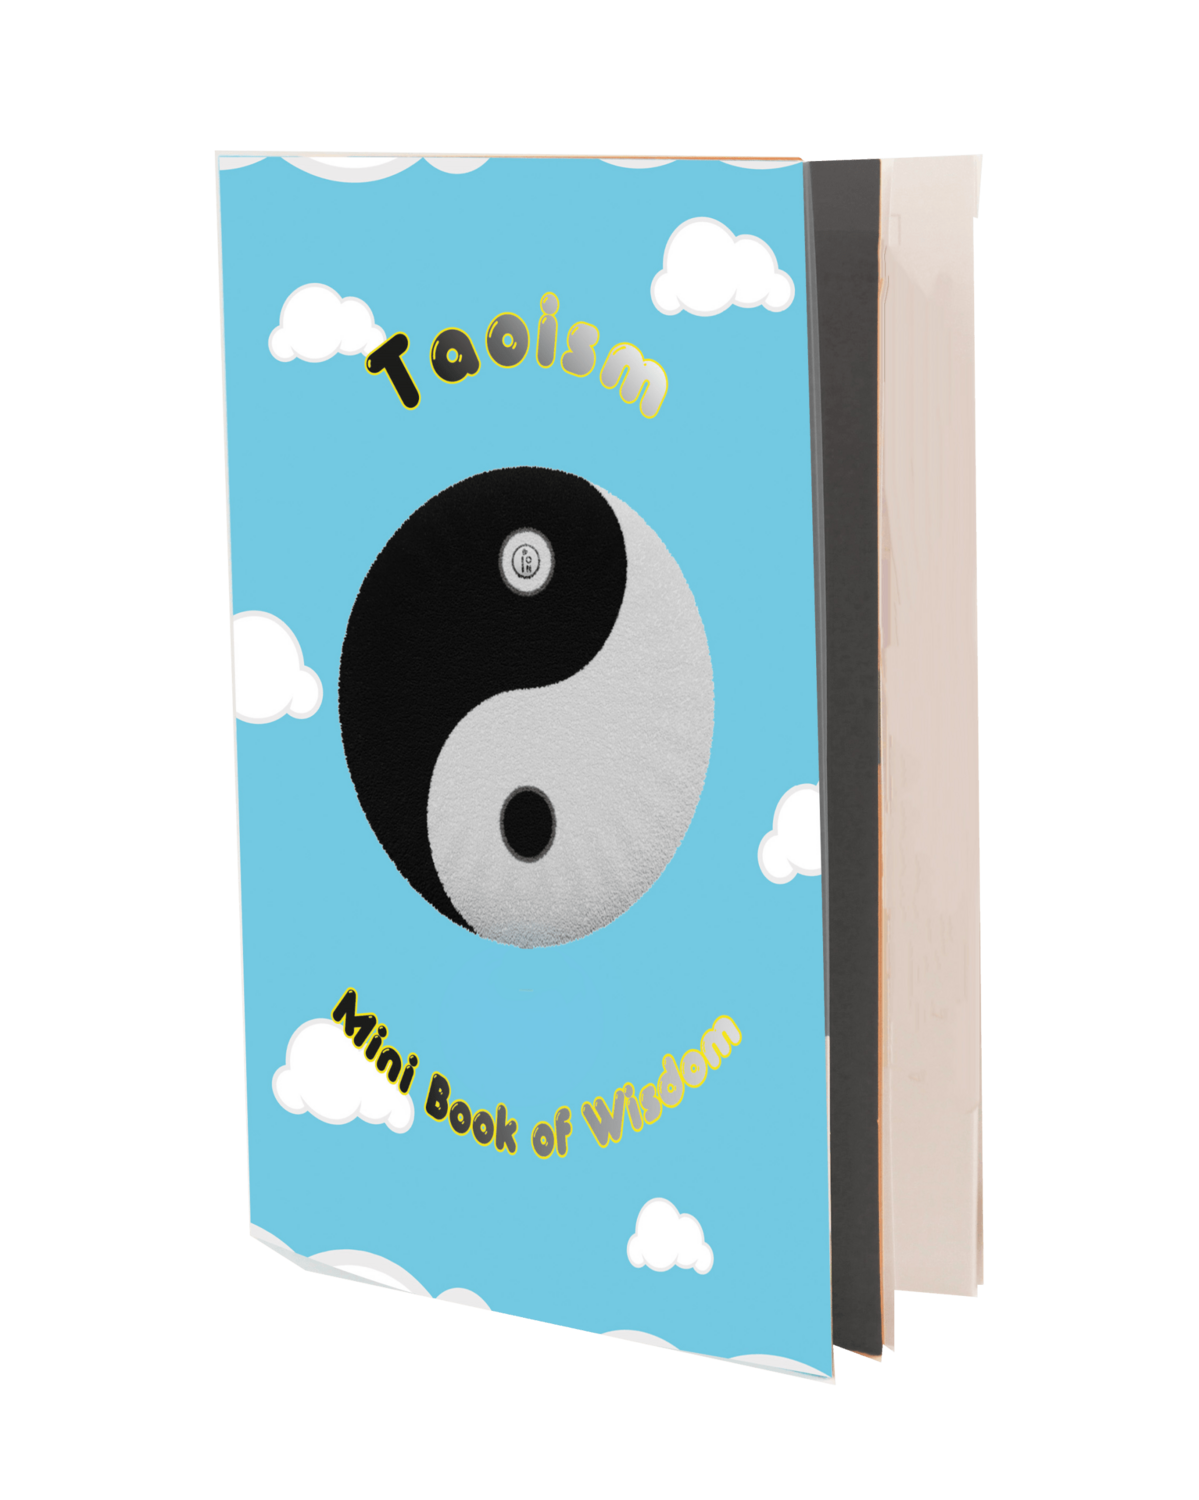 Taoism Teachings - Mini Book of Wisdom